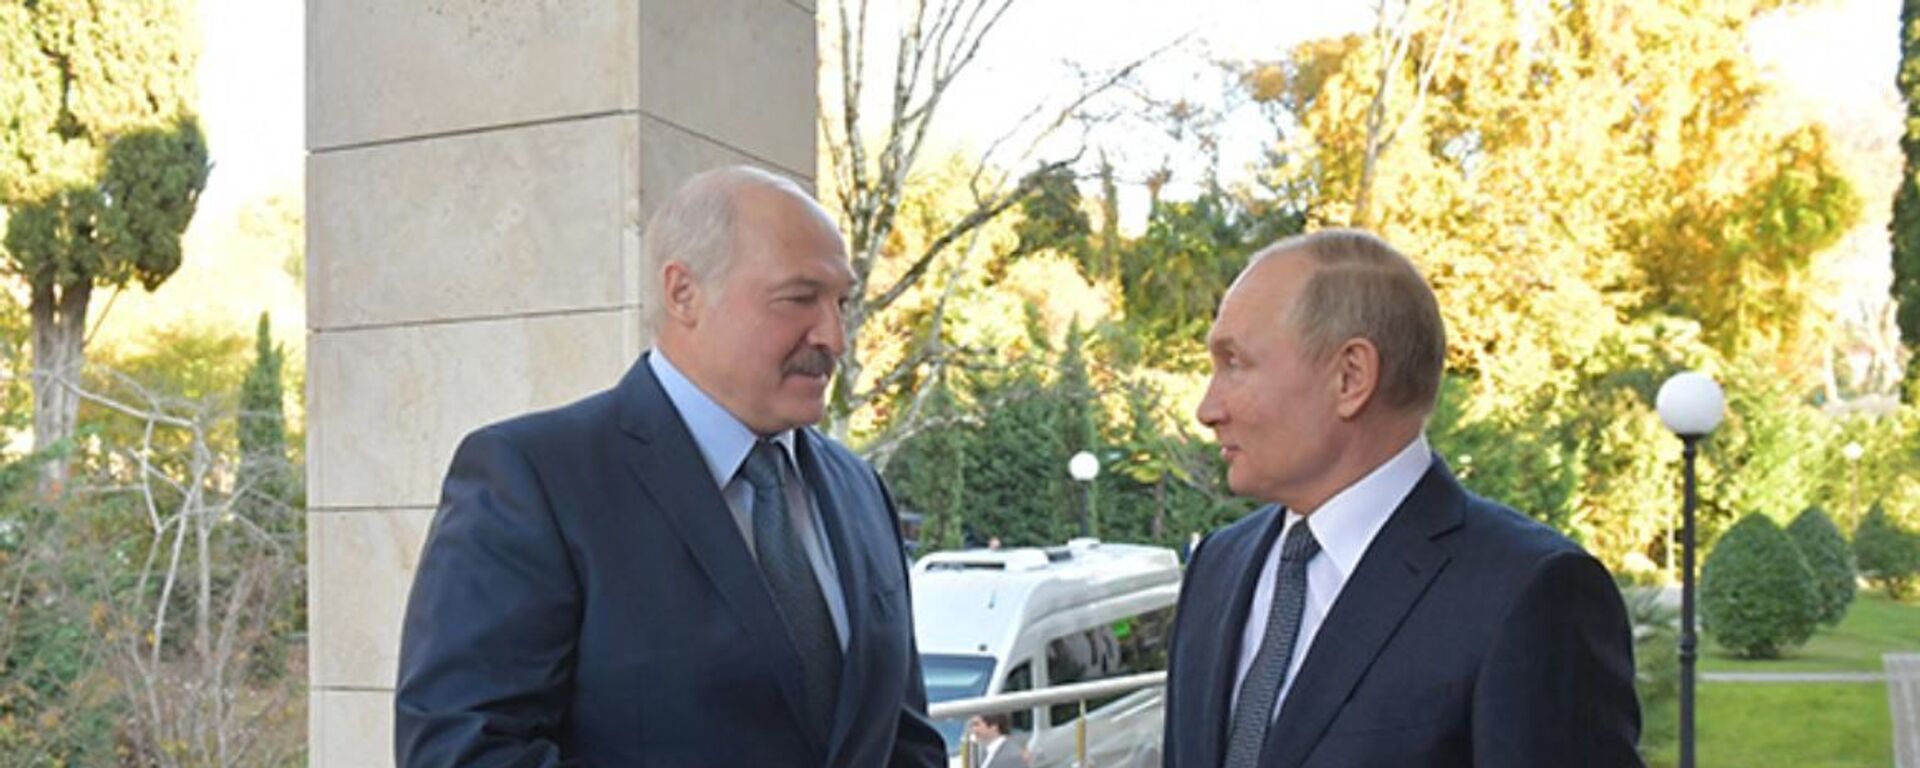 Президенты Александр Лукашенко и Владимир Путин - Sputnik Беларусь, 1920, 19.02.2021